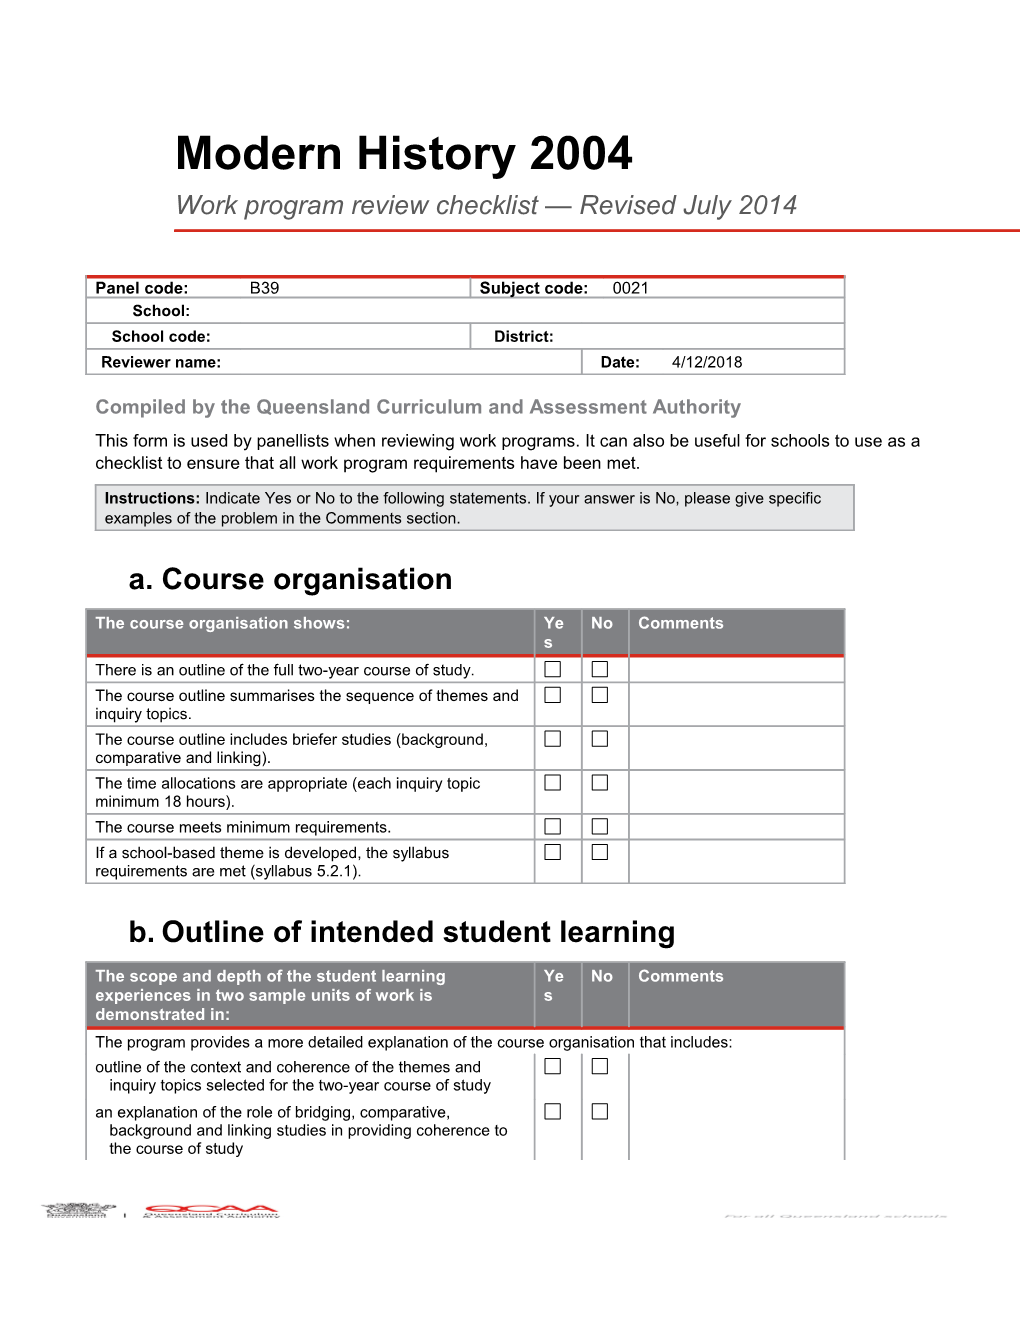 Modern History 2004 Work Program Checklist